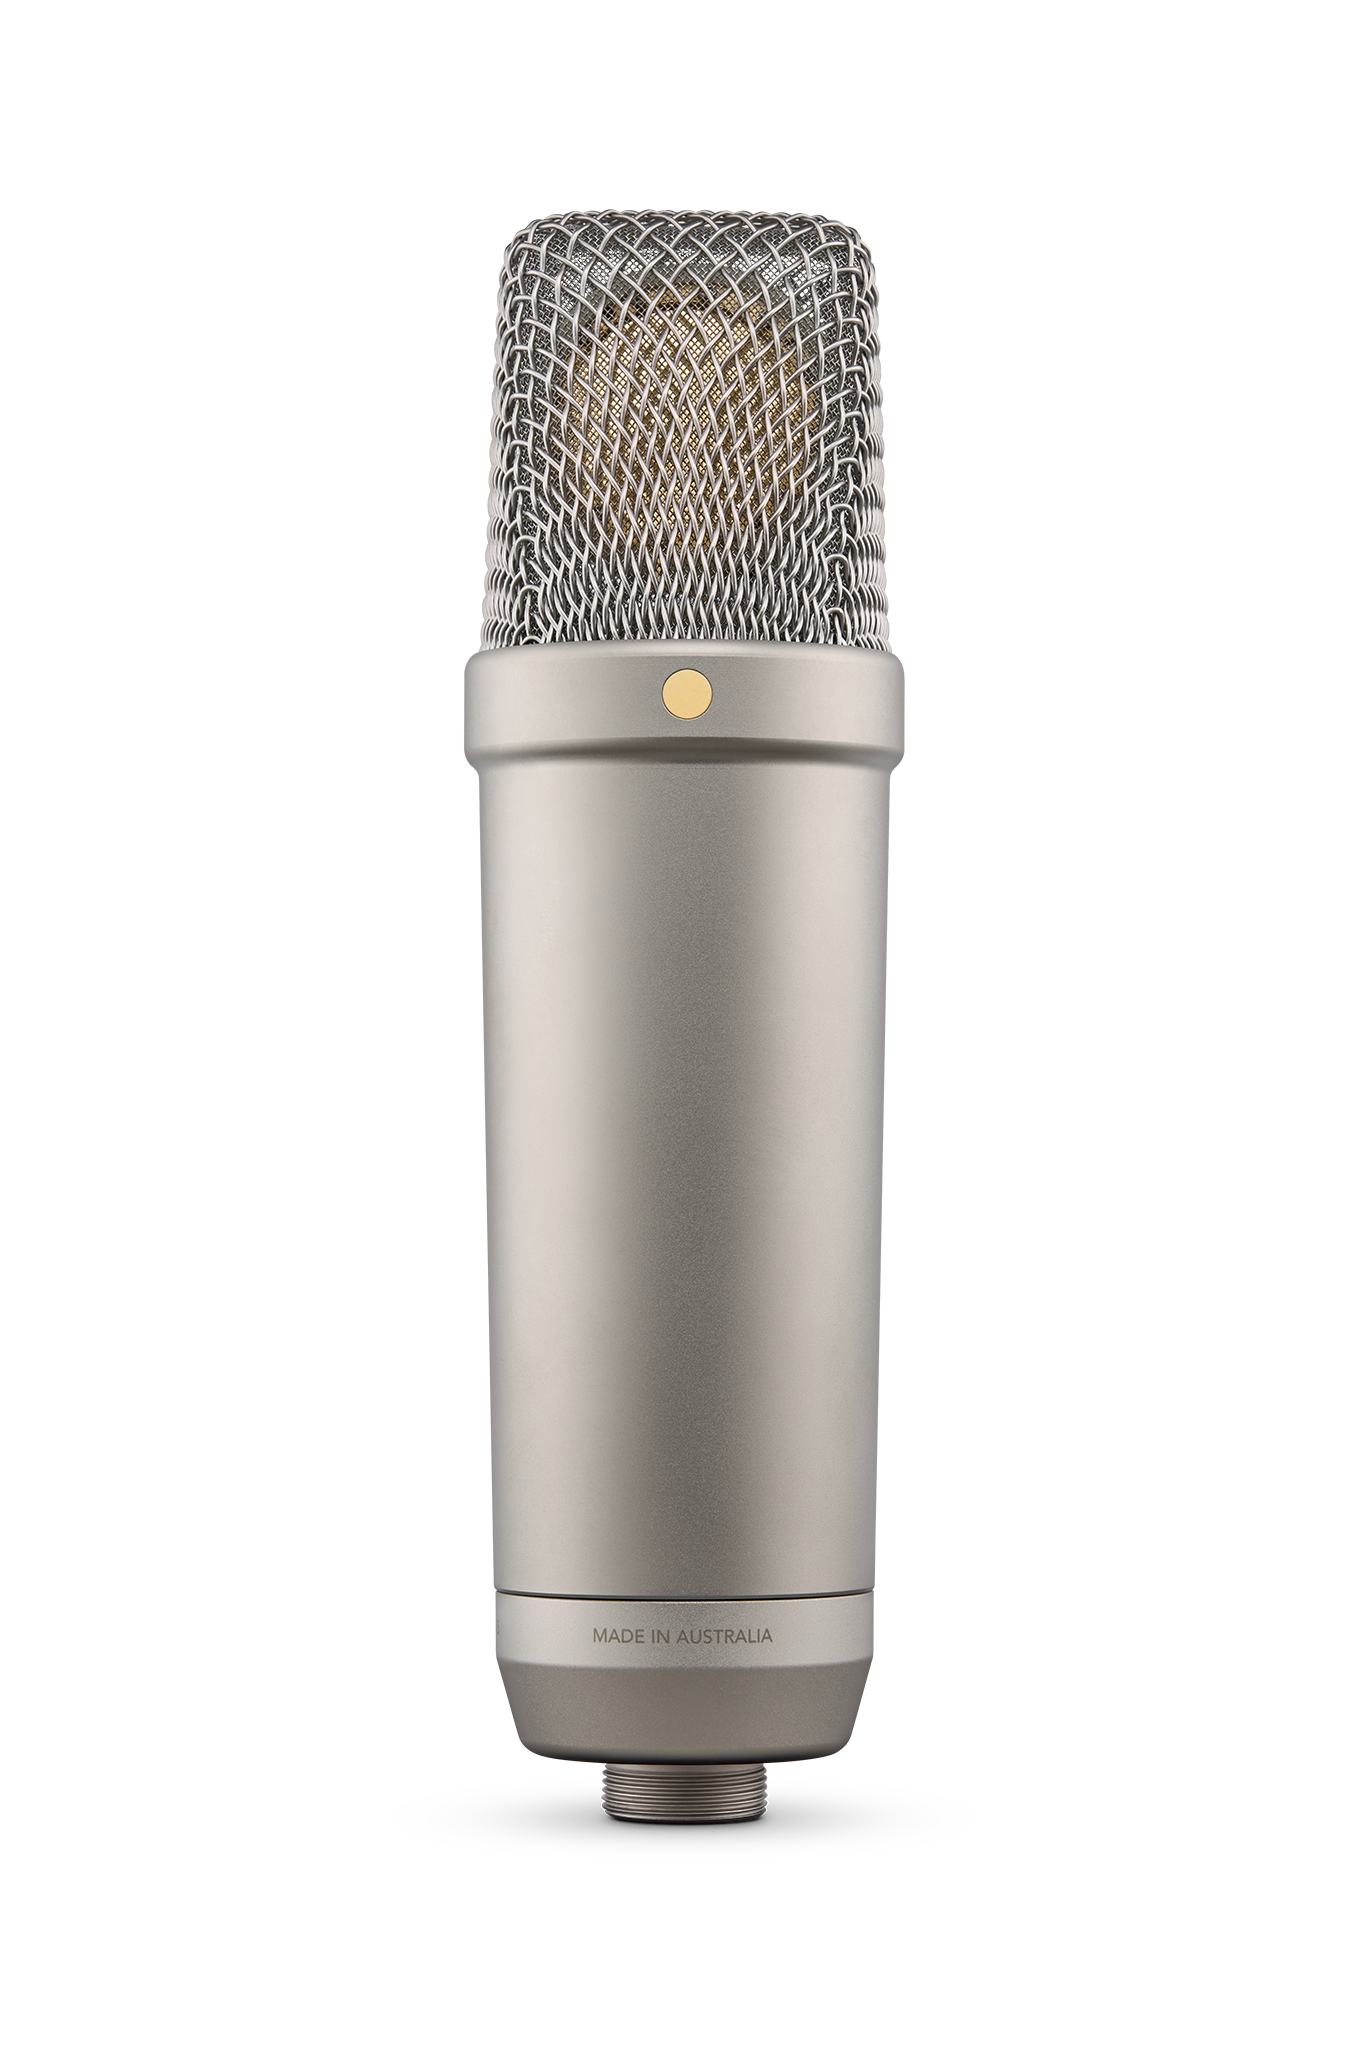 Micrófono de estudio RODE NT1 5a generación